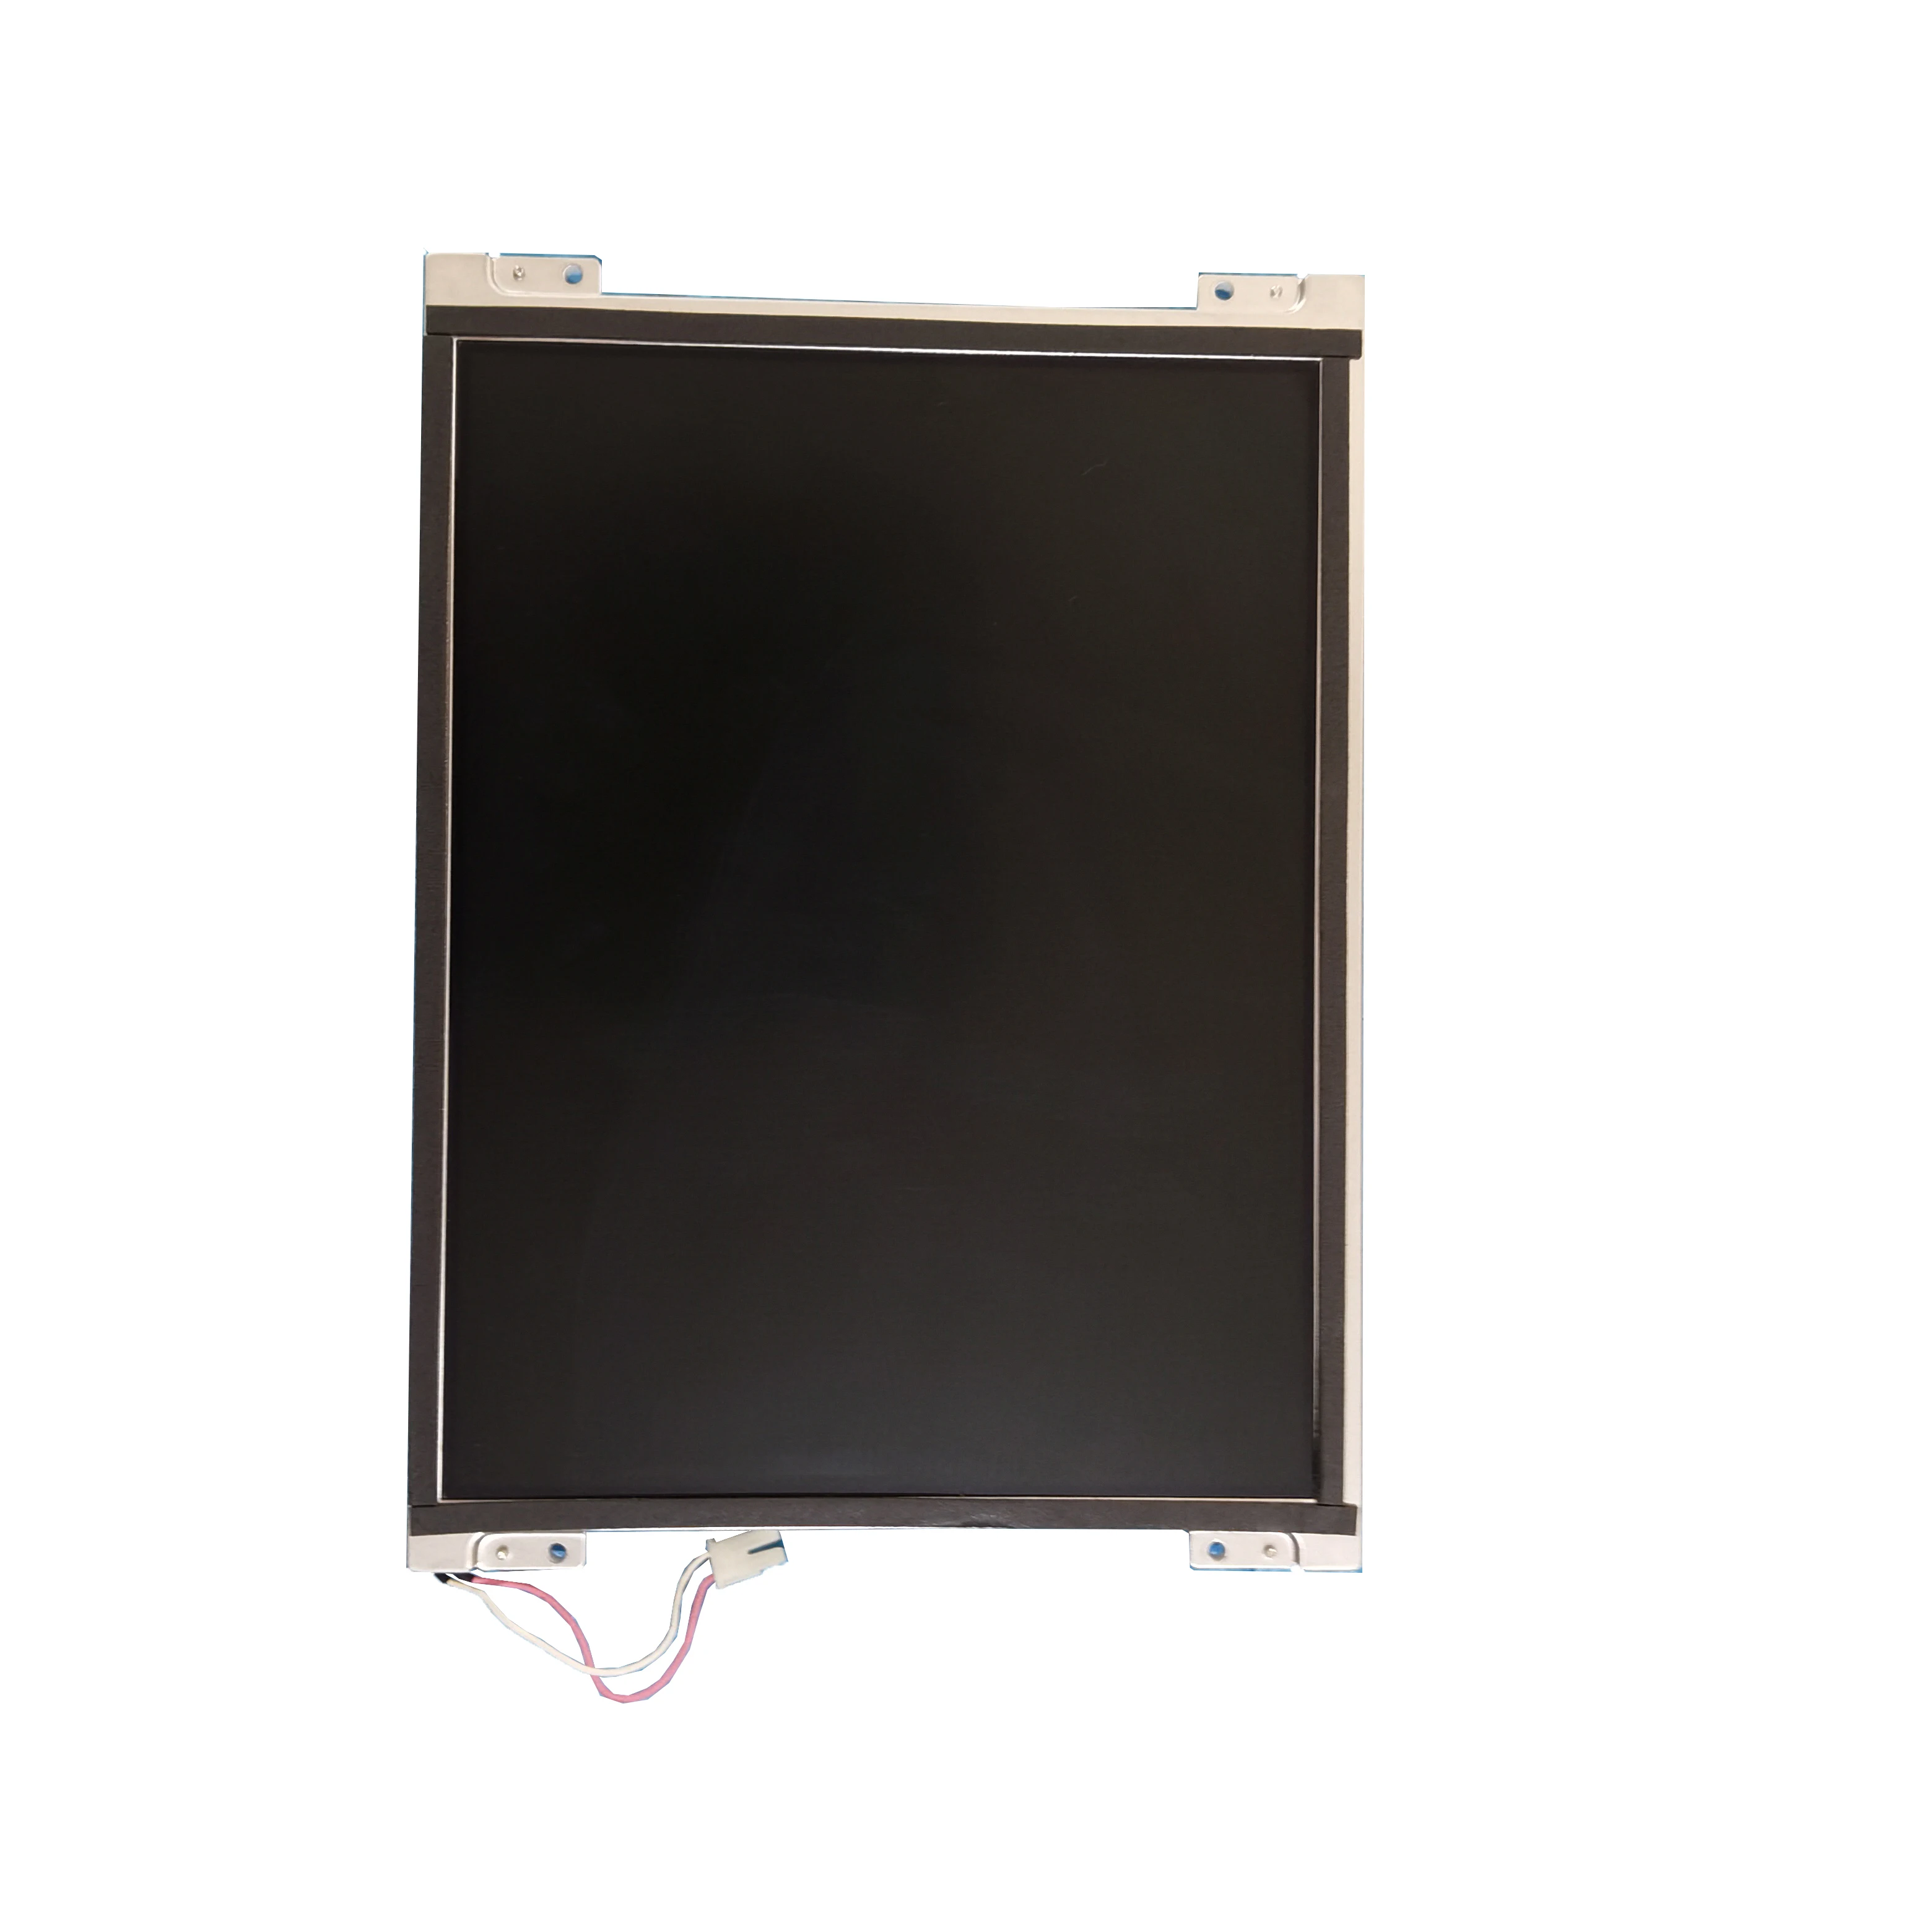 

8.4inch 800*600 LCD Panel Display Screen B084SN02 V.0